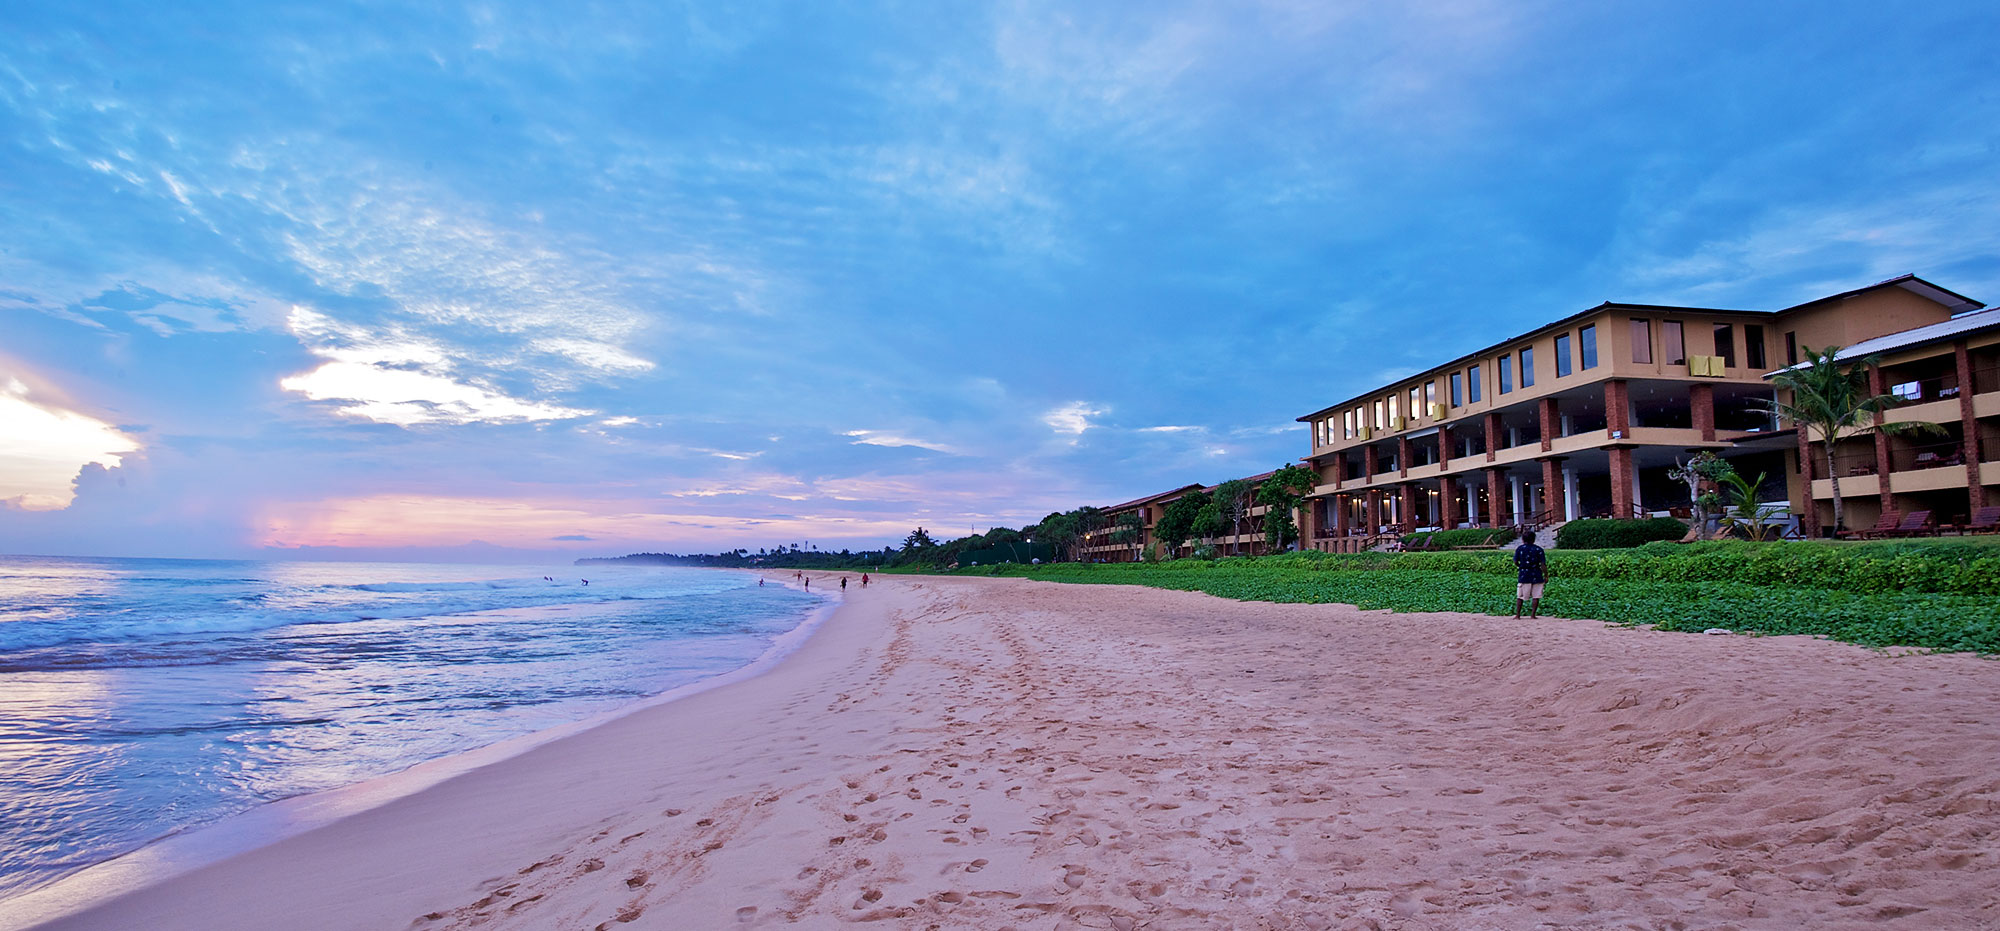 Photo Gallery of The Long Beach Resort in Koggala Sri Lanka